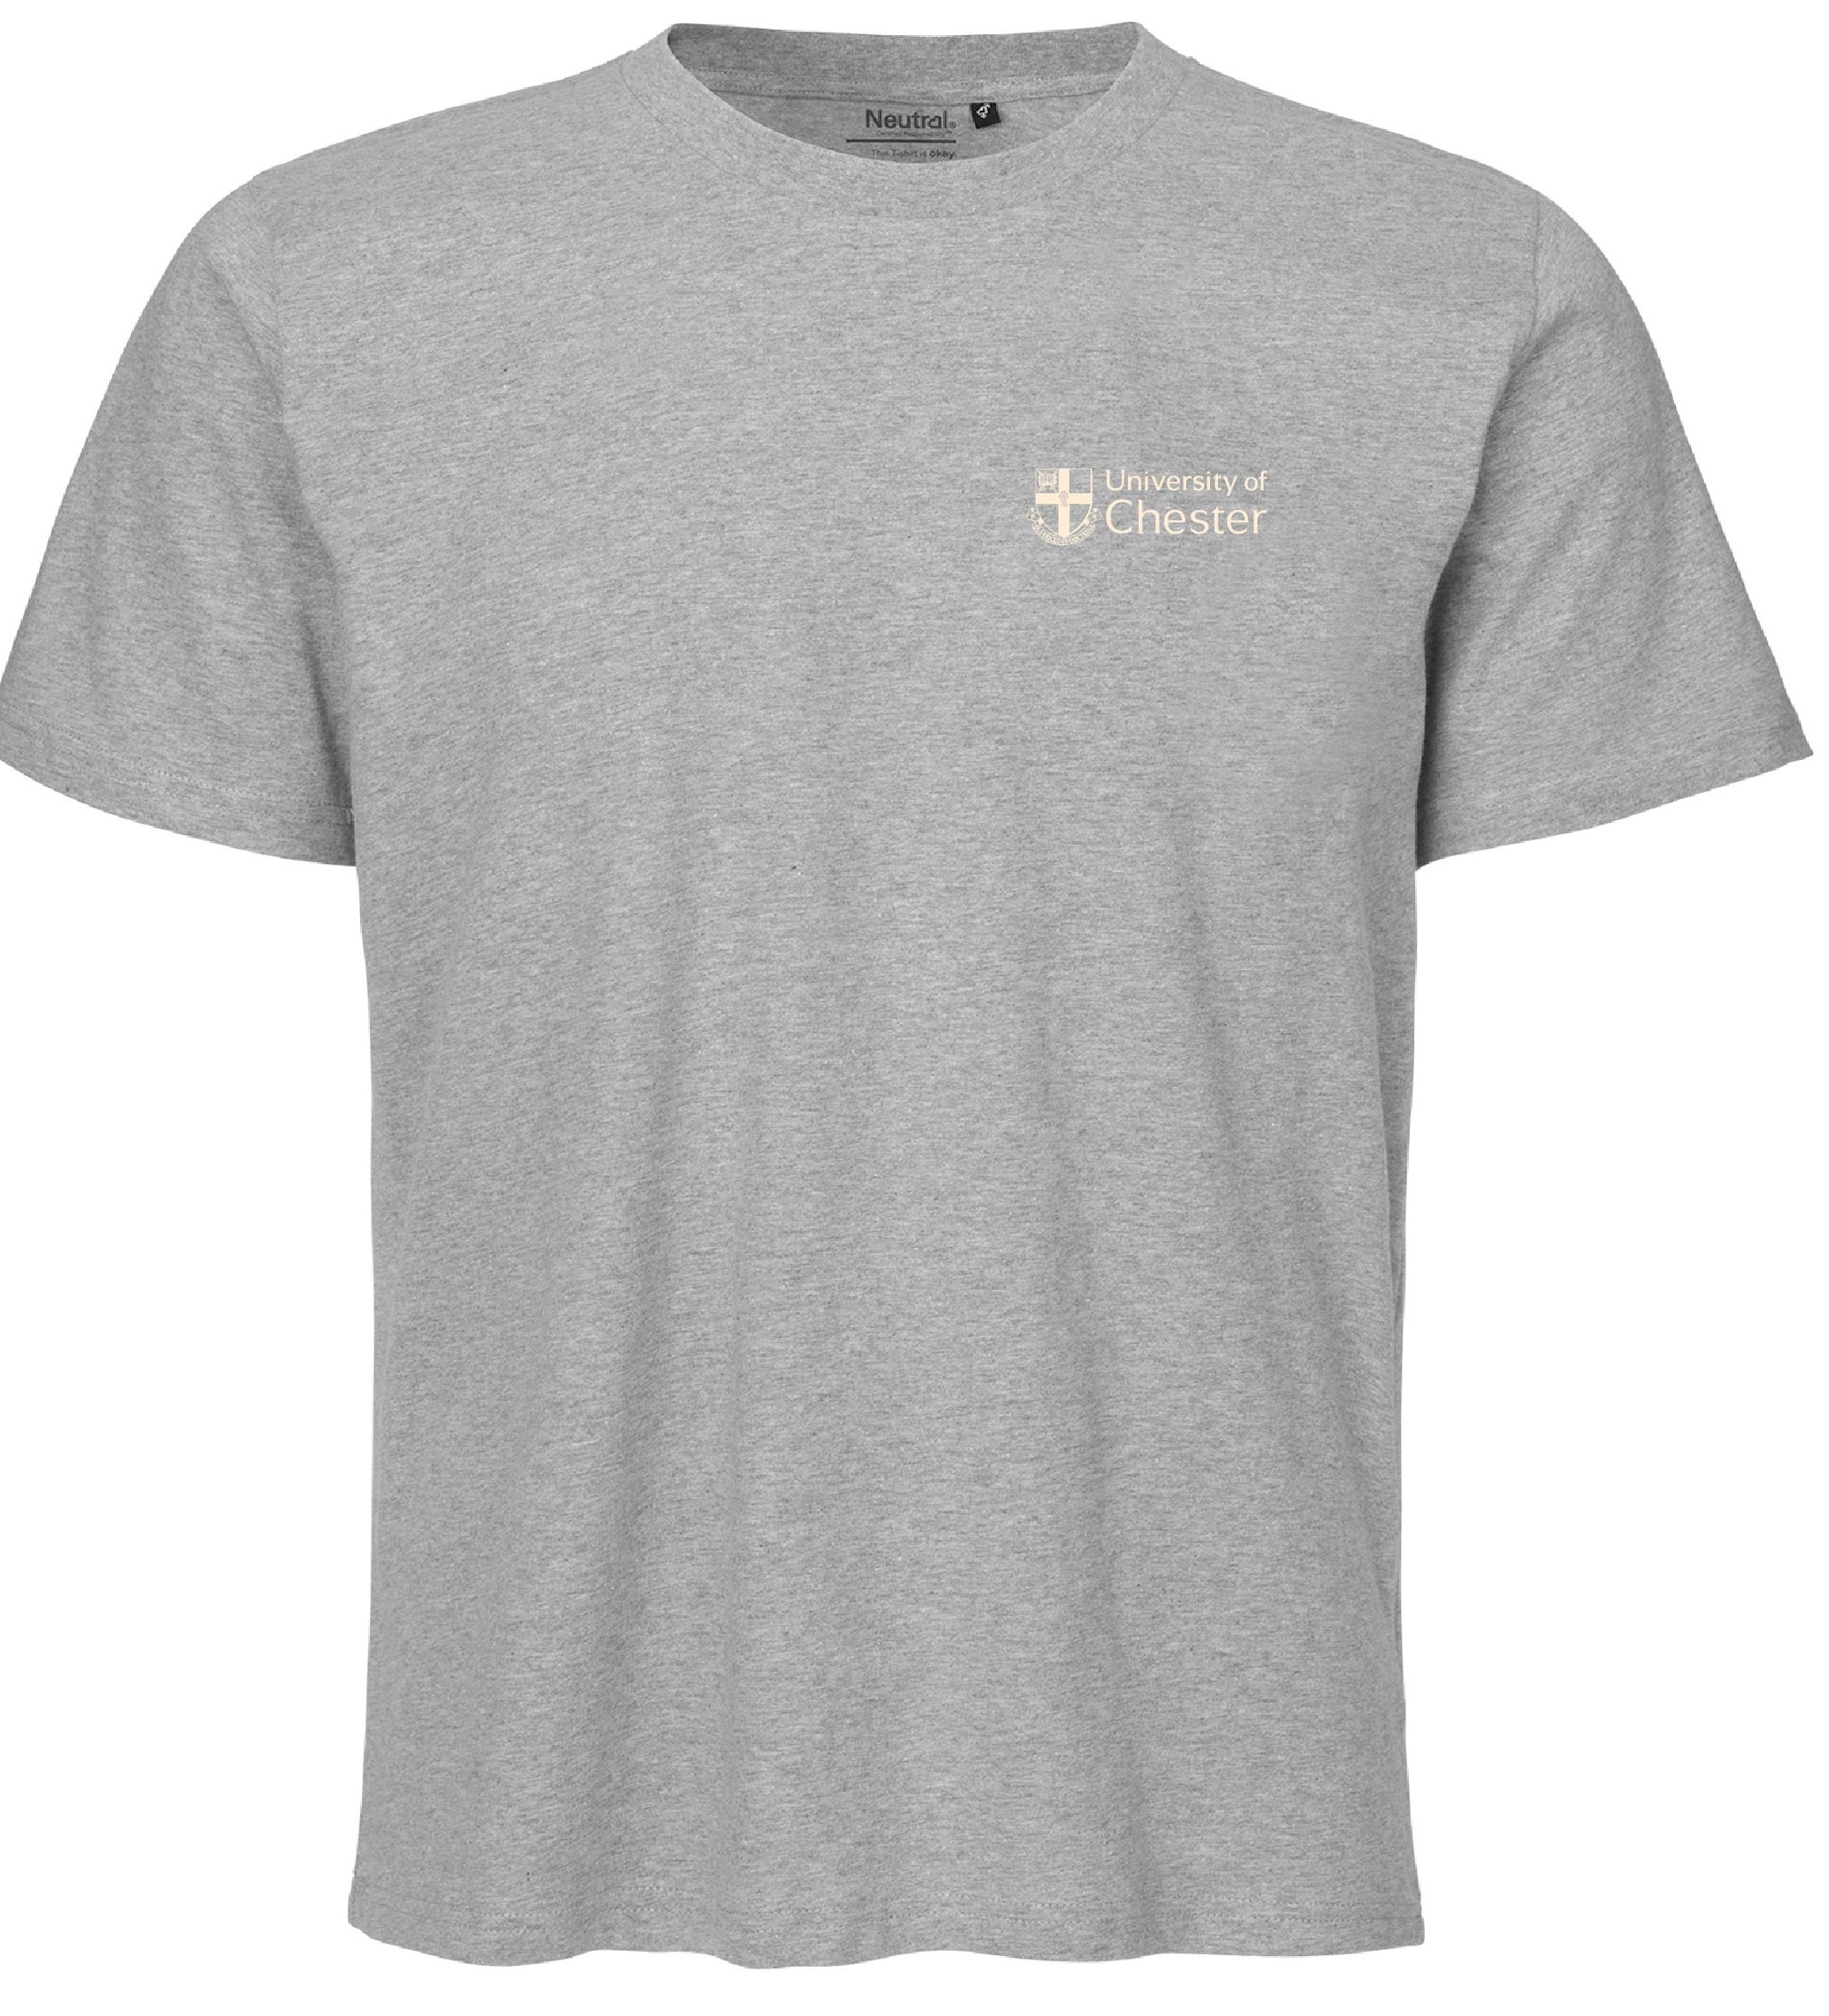 Neutral range - UoC T-Shirt - Grey - XXL